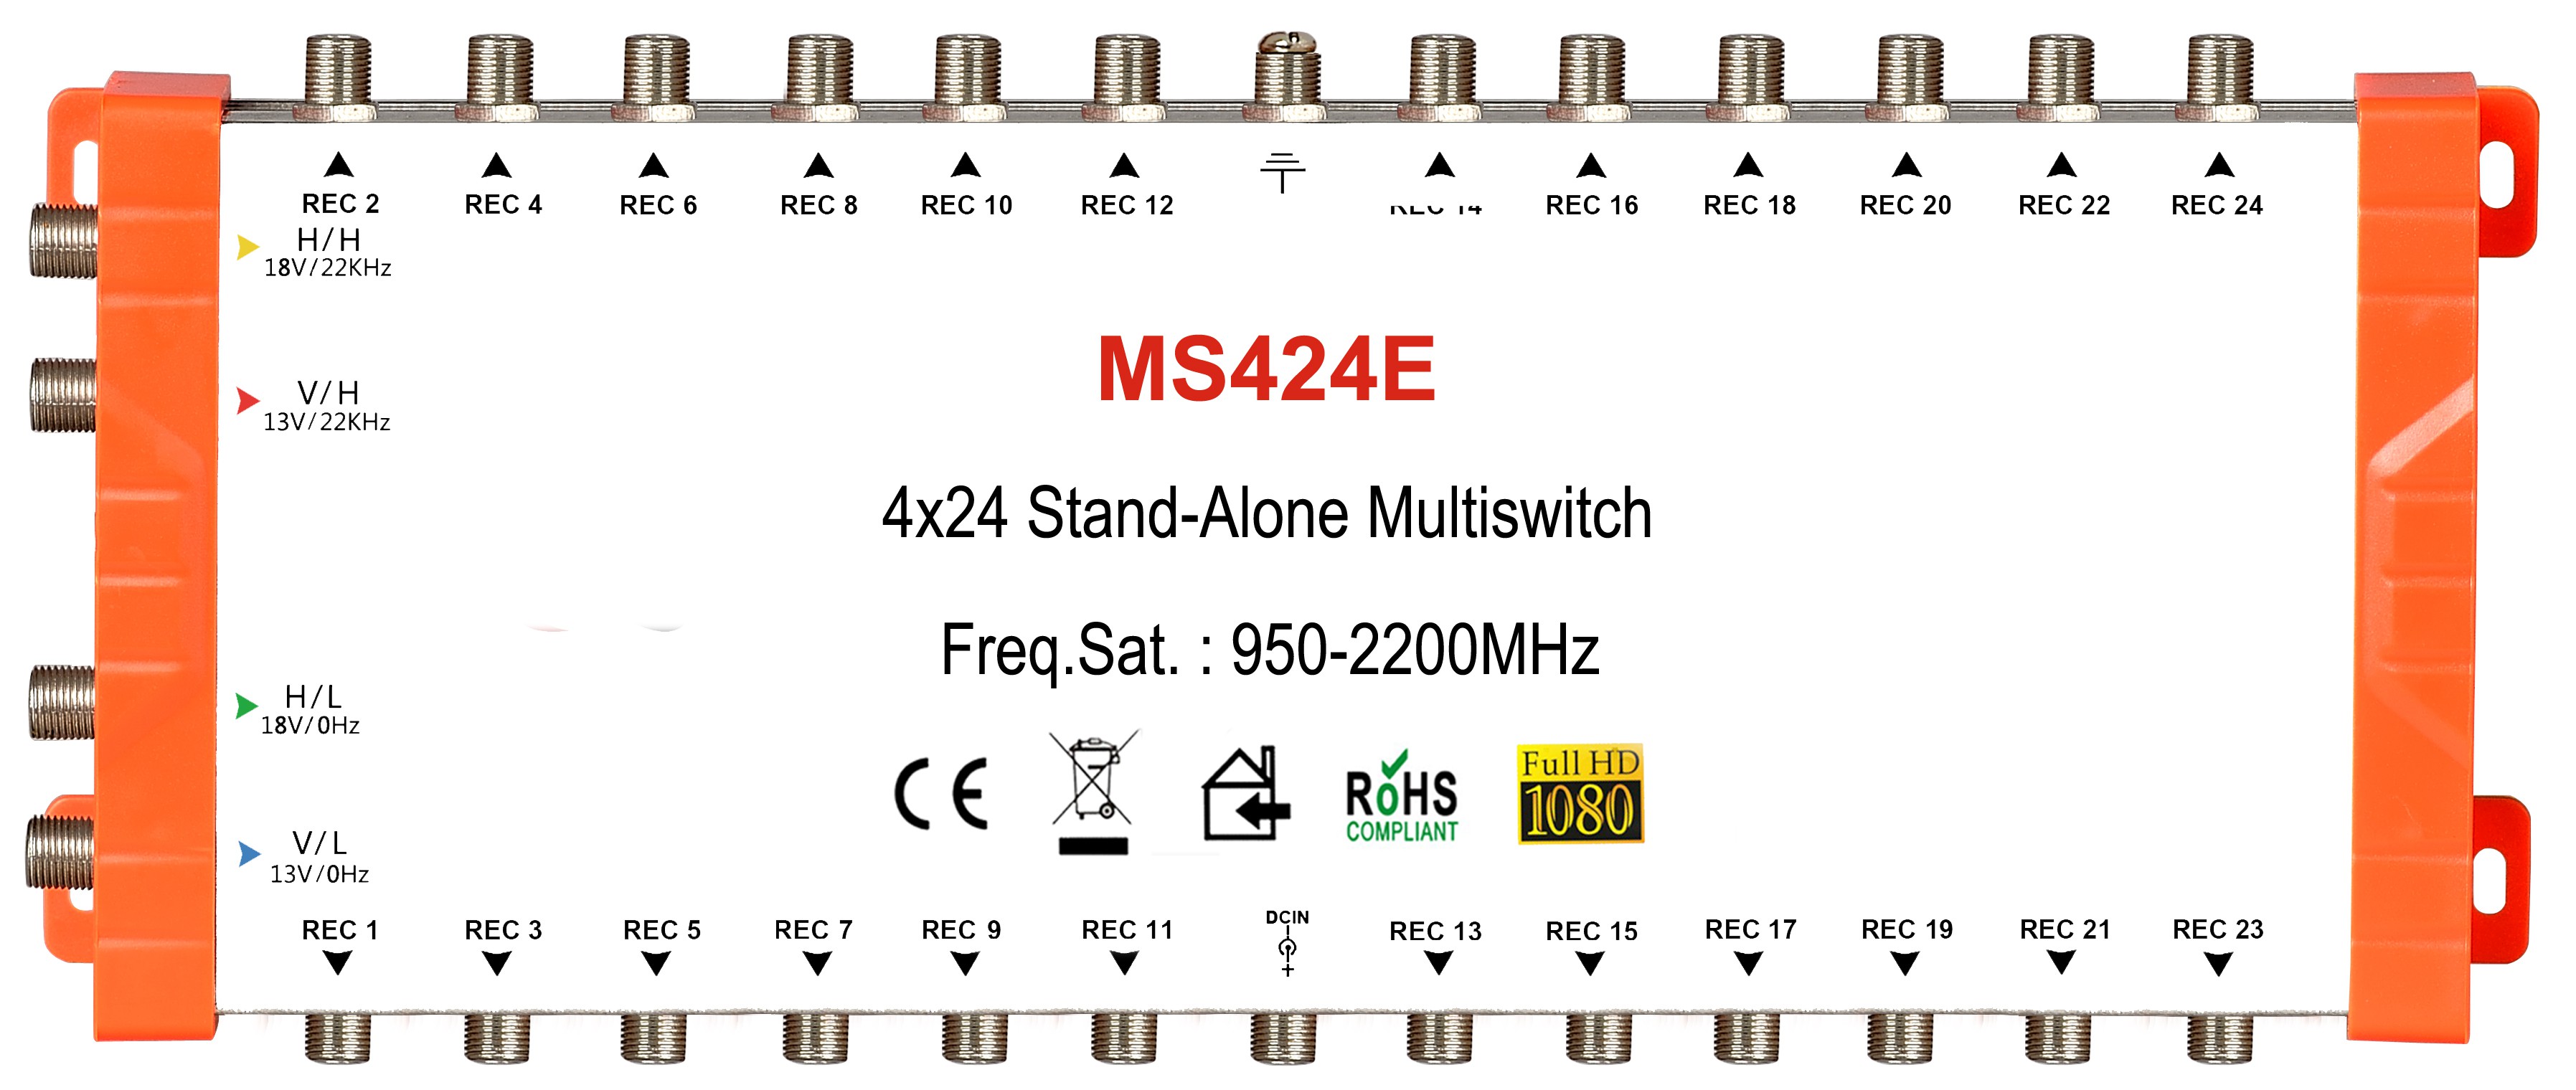 4x24 satellite multi-switch, Stand-Alone multiswitch